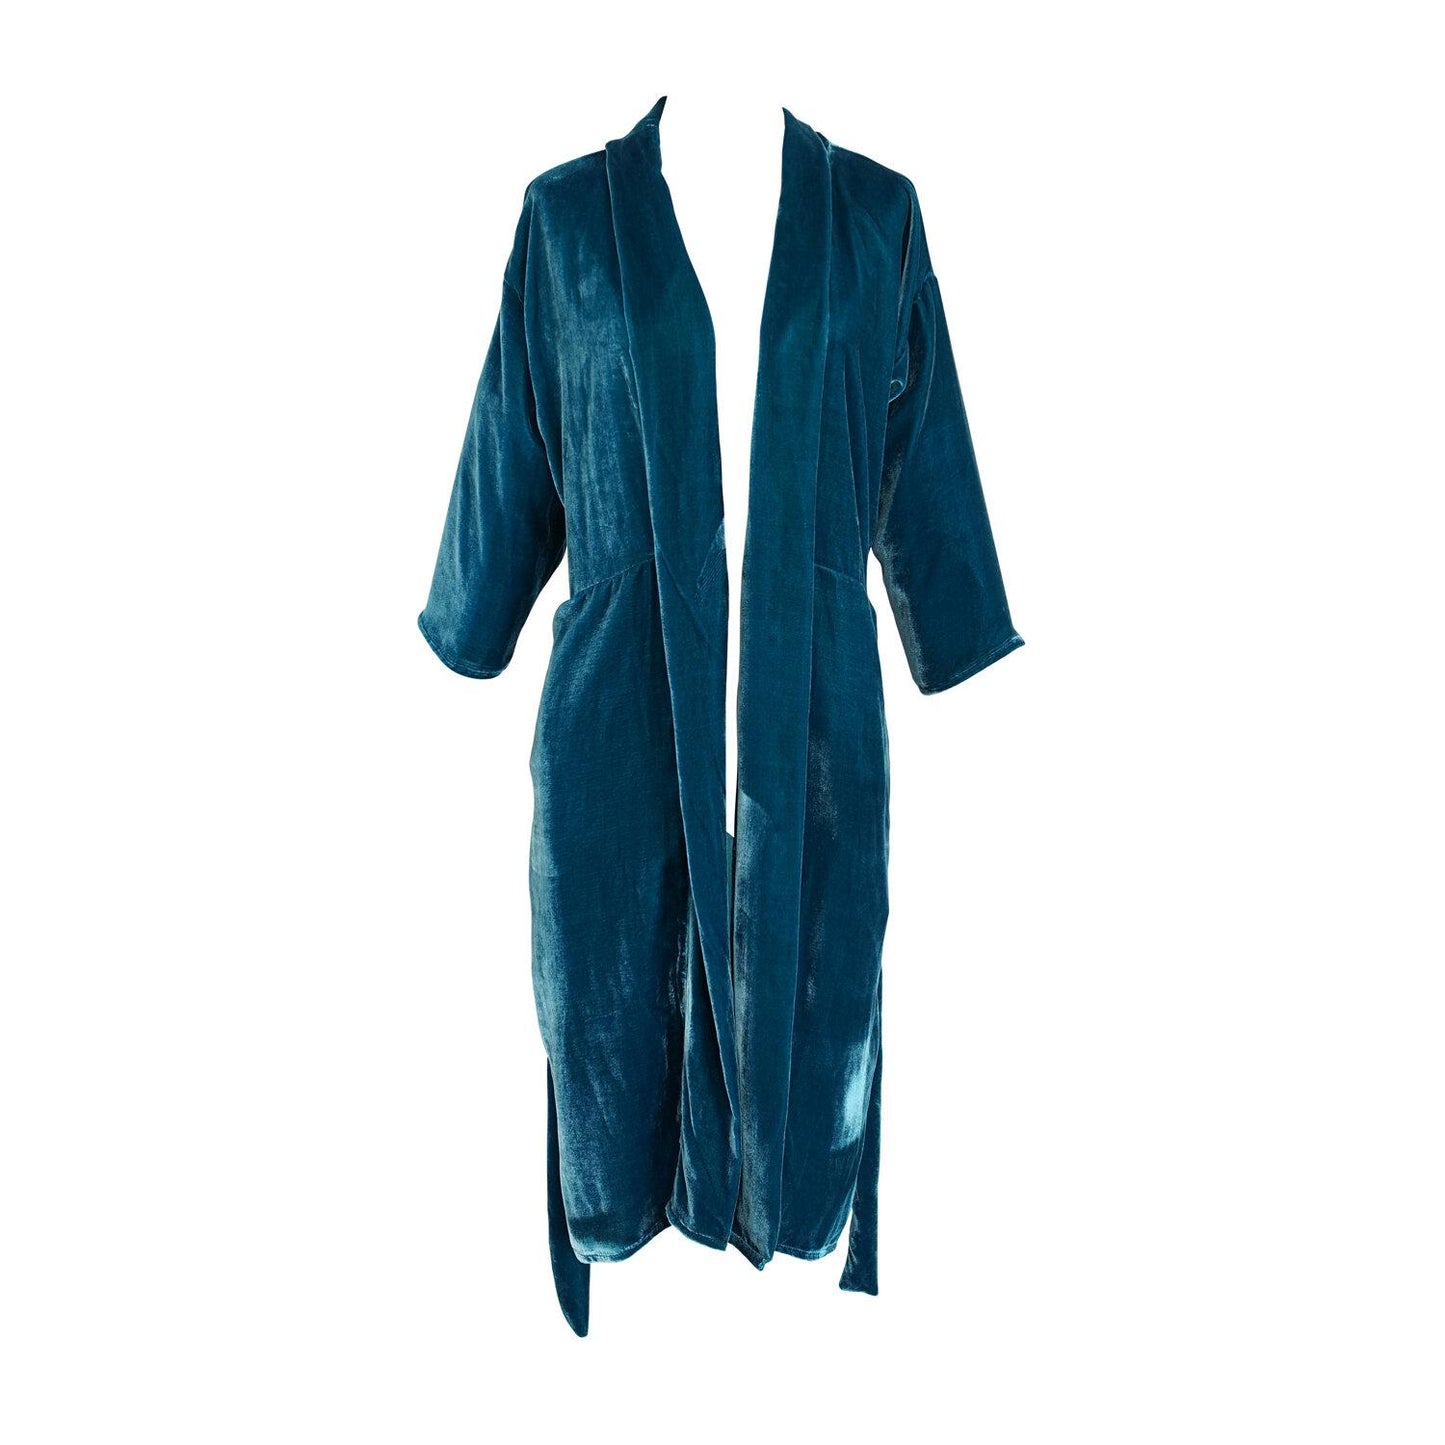 peacock silk velvet koi kimono teal robe jacket cardigan layering fall fashion everyday luxe handmade